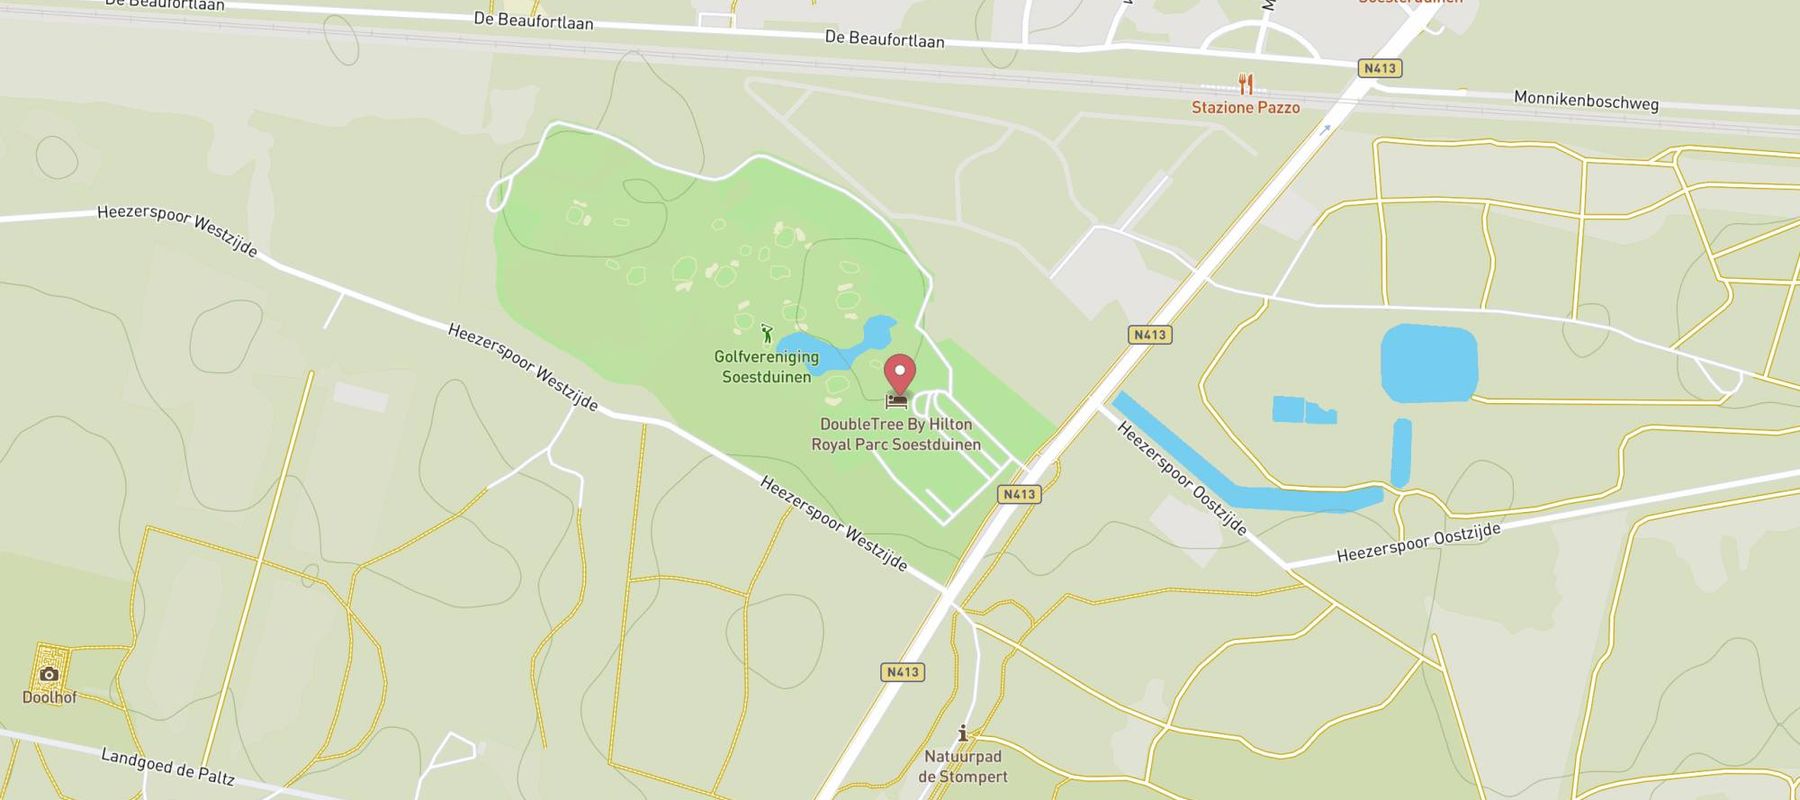 DoubleTree by Hilton Royal Parc Soestduinen map